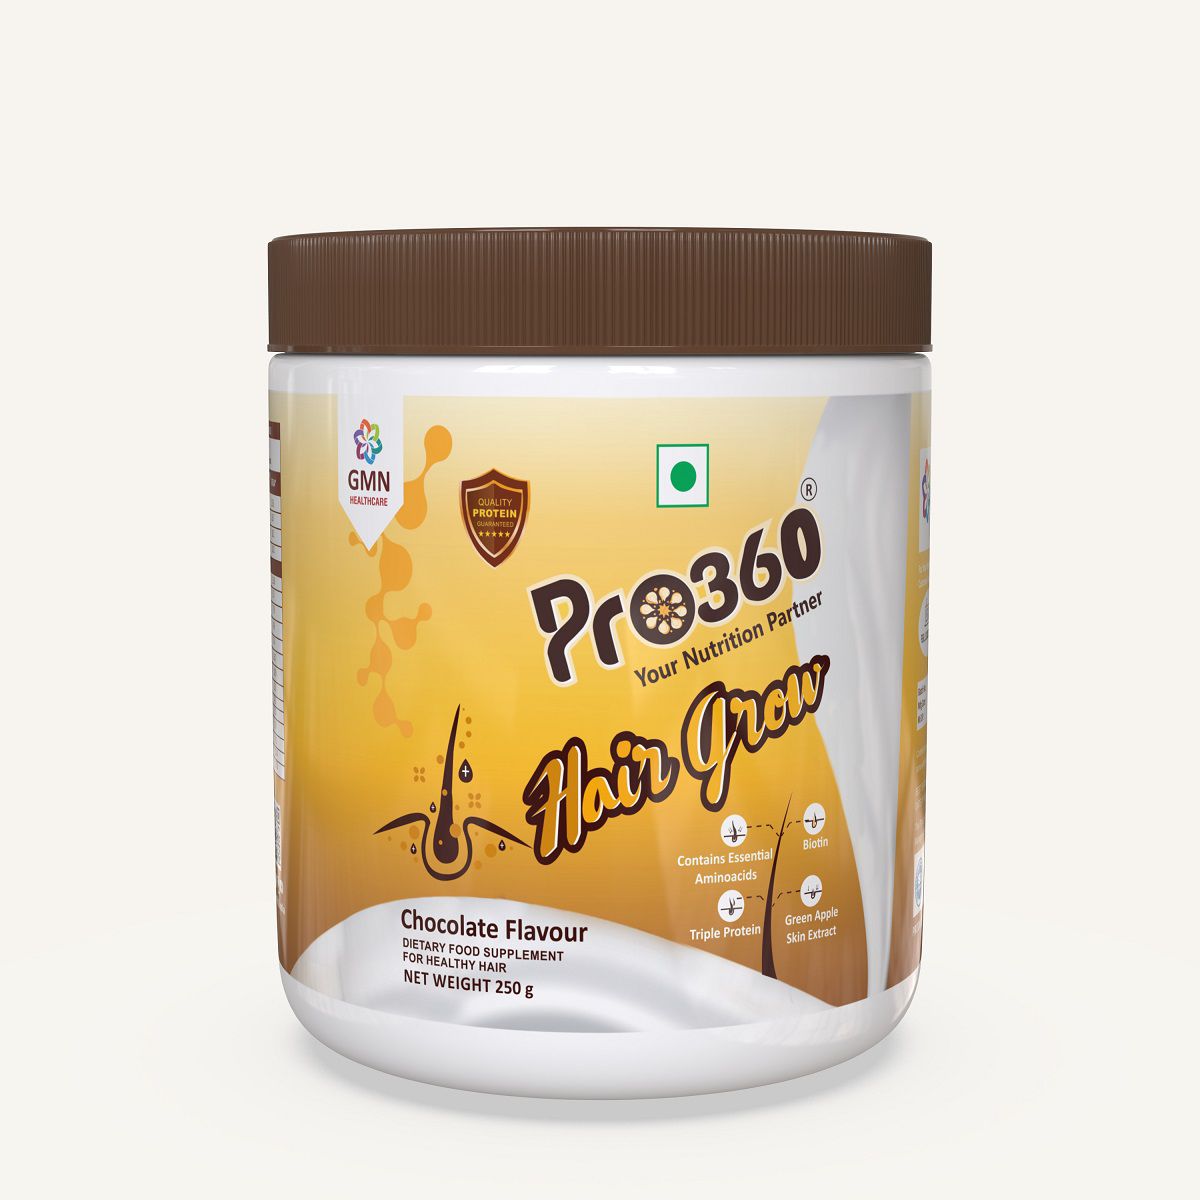     			PRO360 Hair Grow Protein Nutrition Drink Powder 250 gm Chocolate